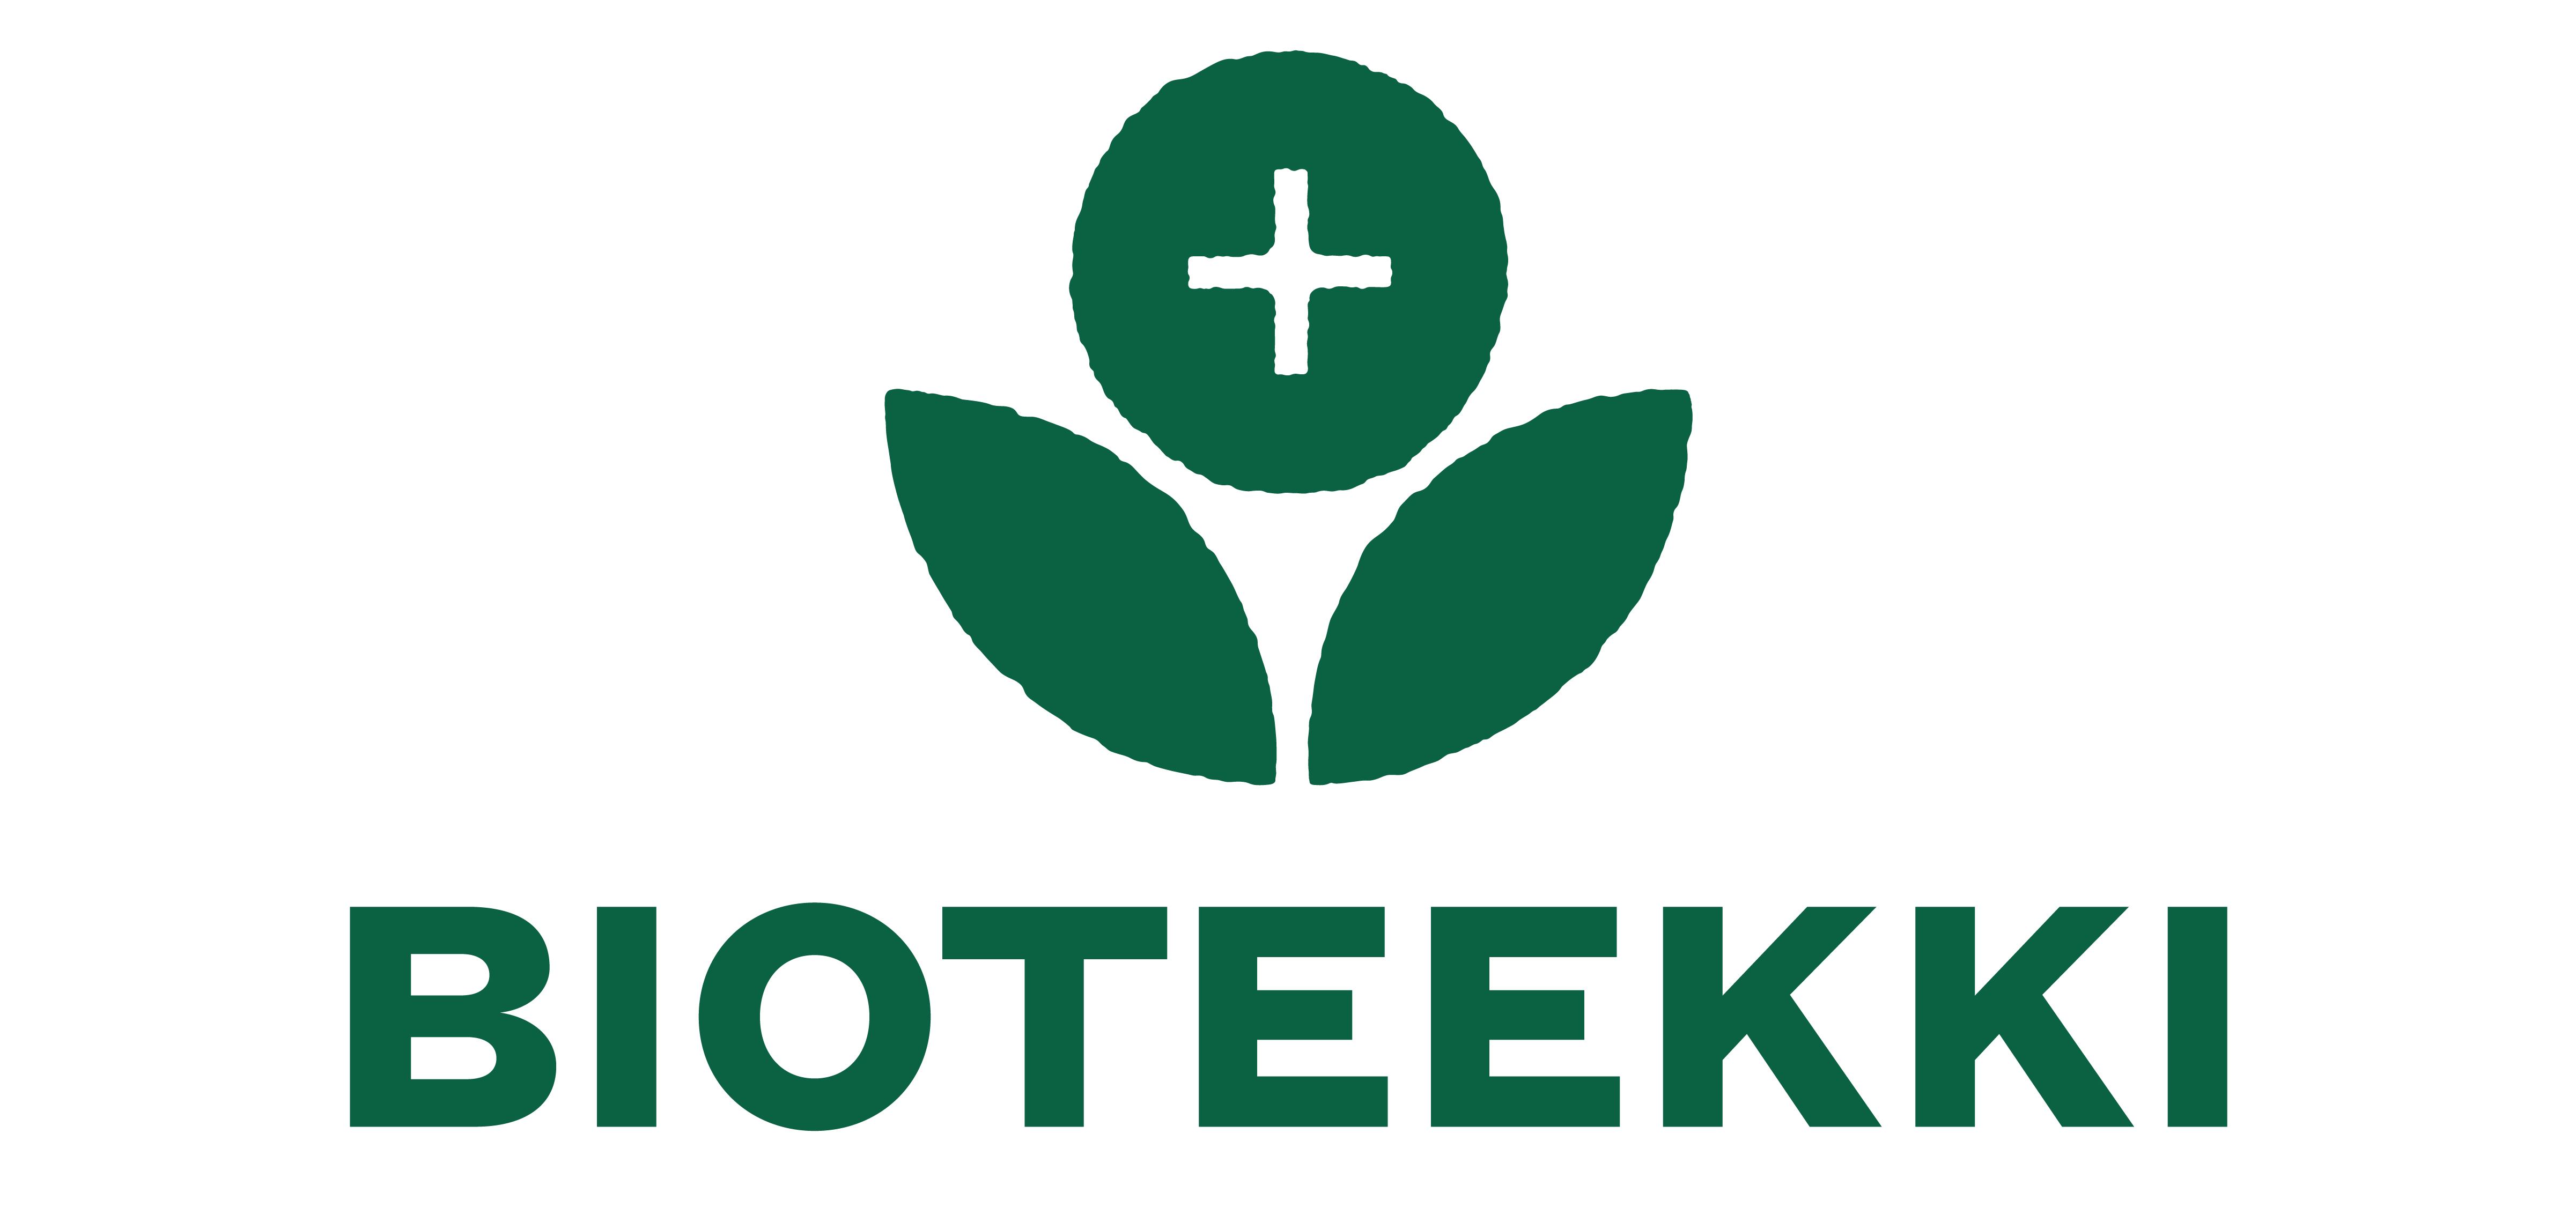 Bioteekki Logo verkko